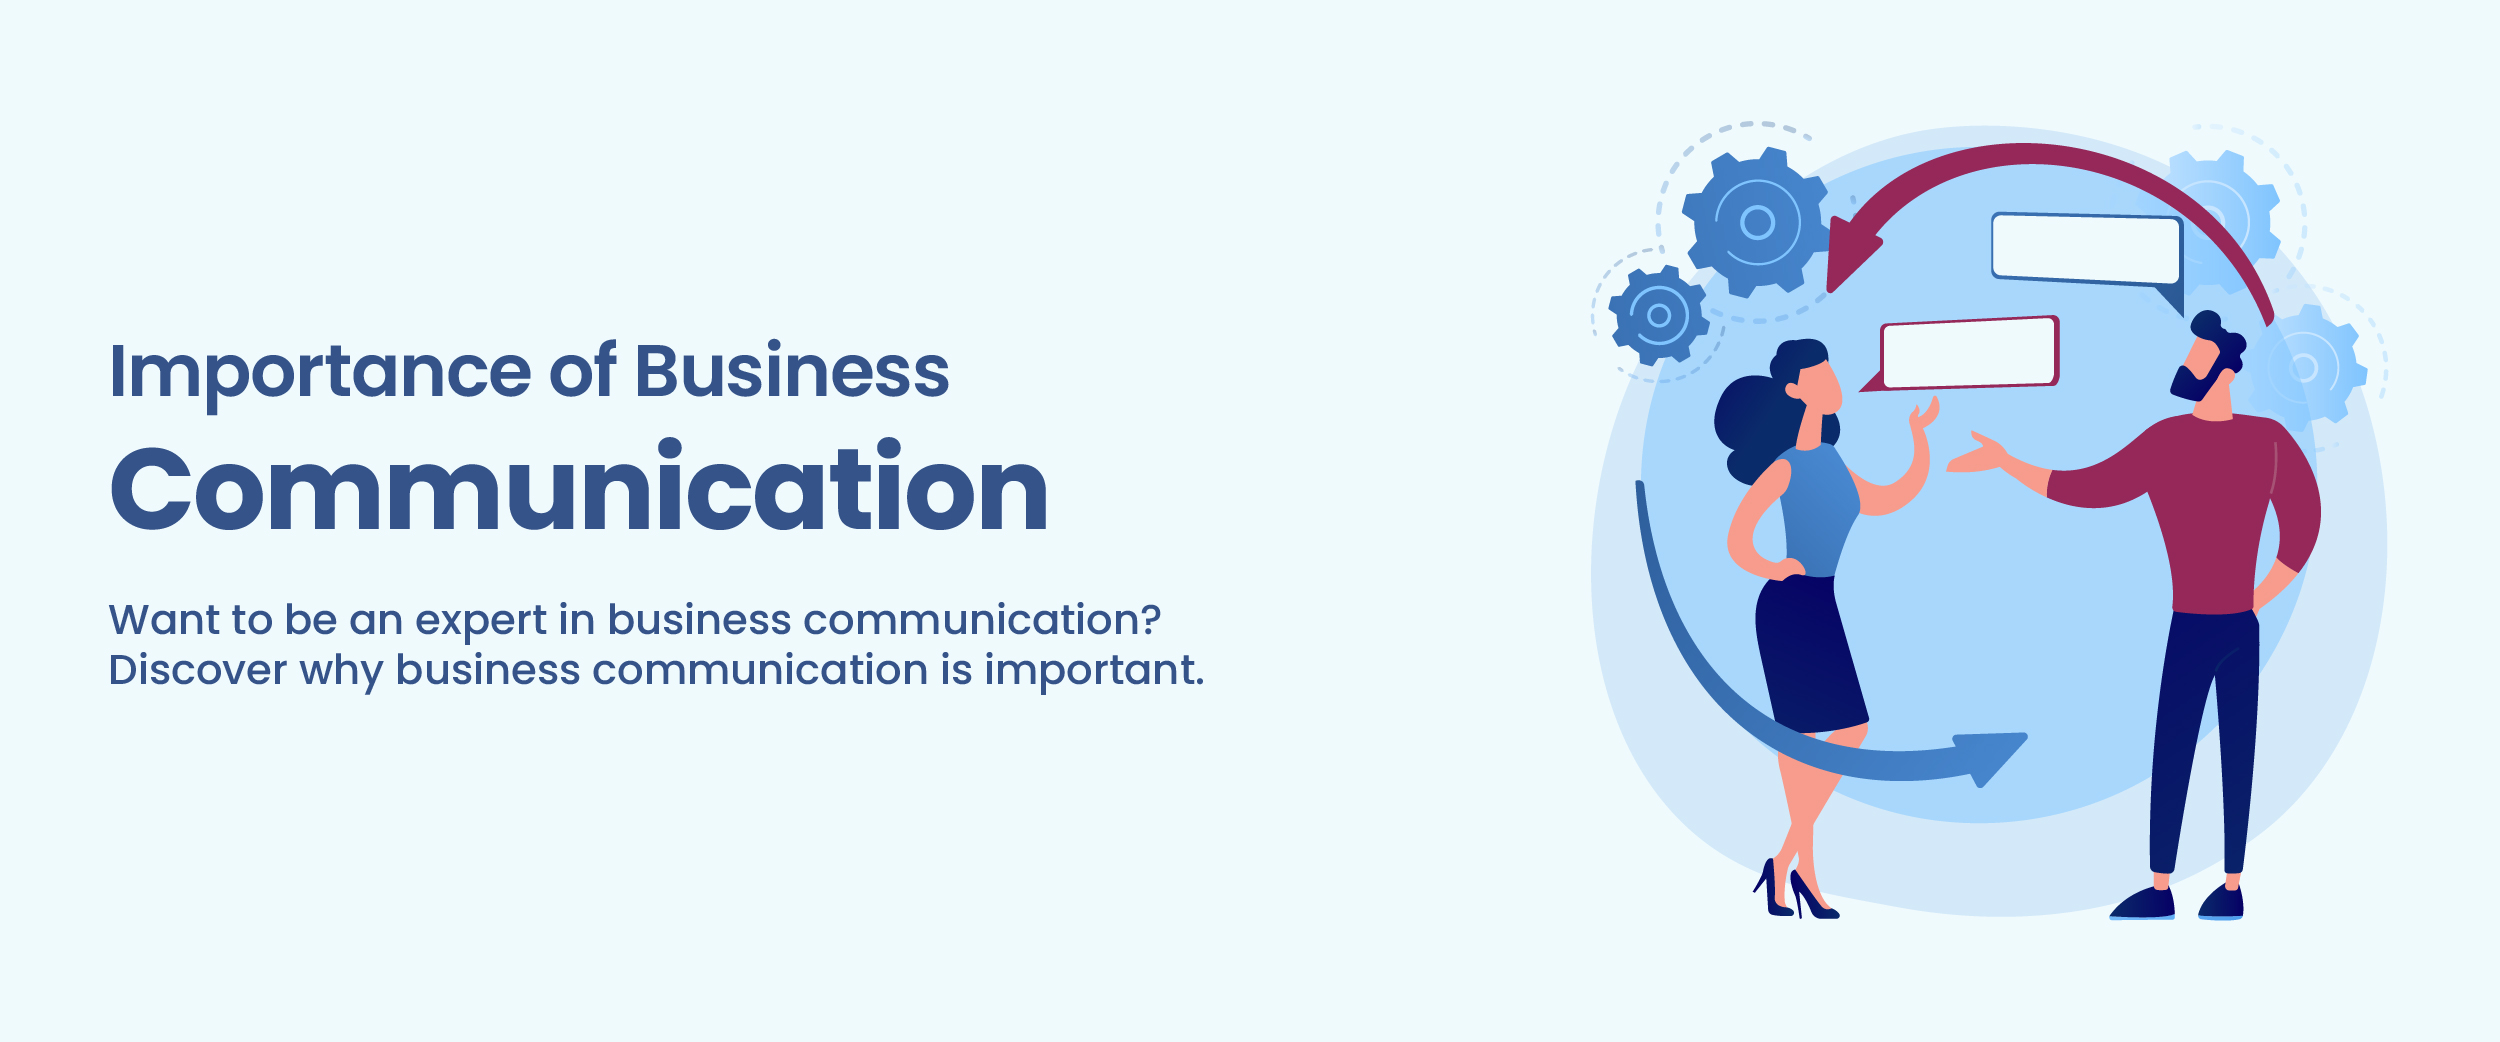 Importance of Business Communication